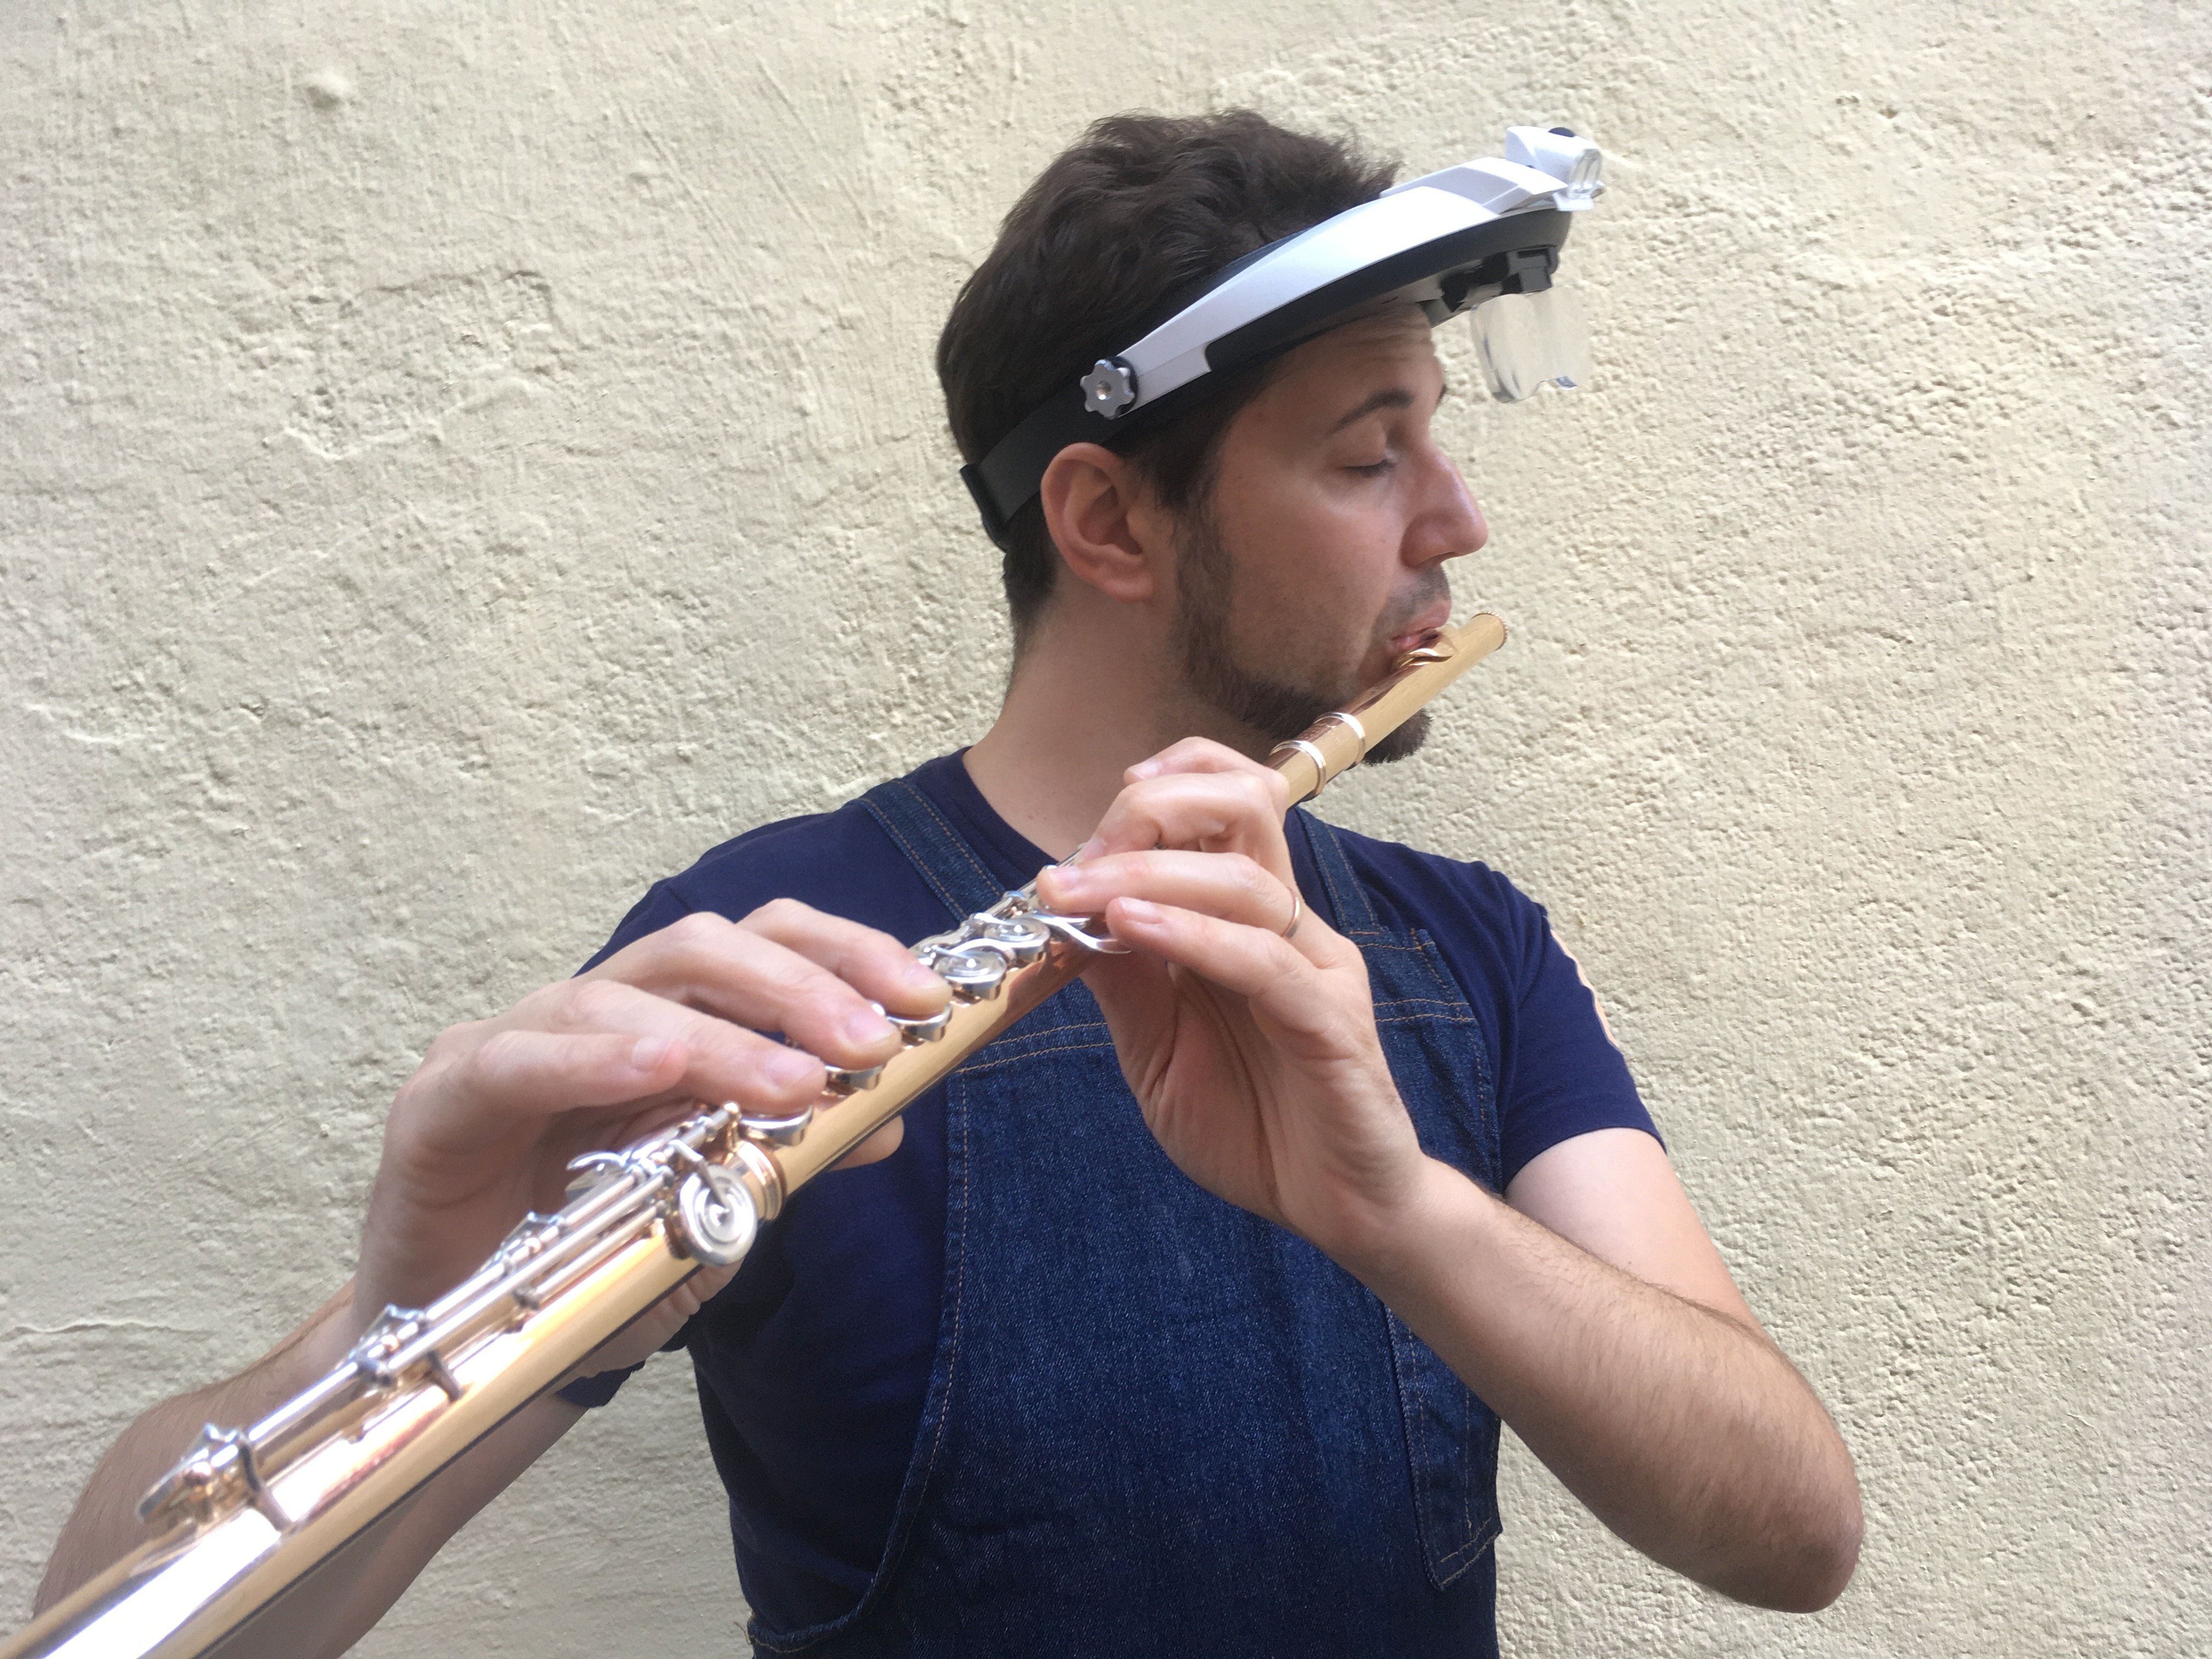 Altus 1707 PS Flute - Flute Specialists